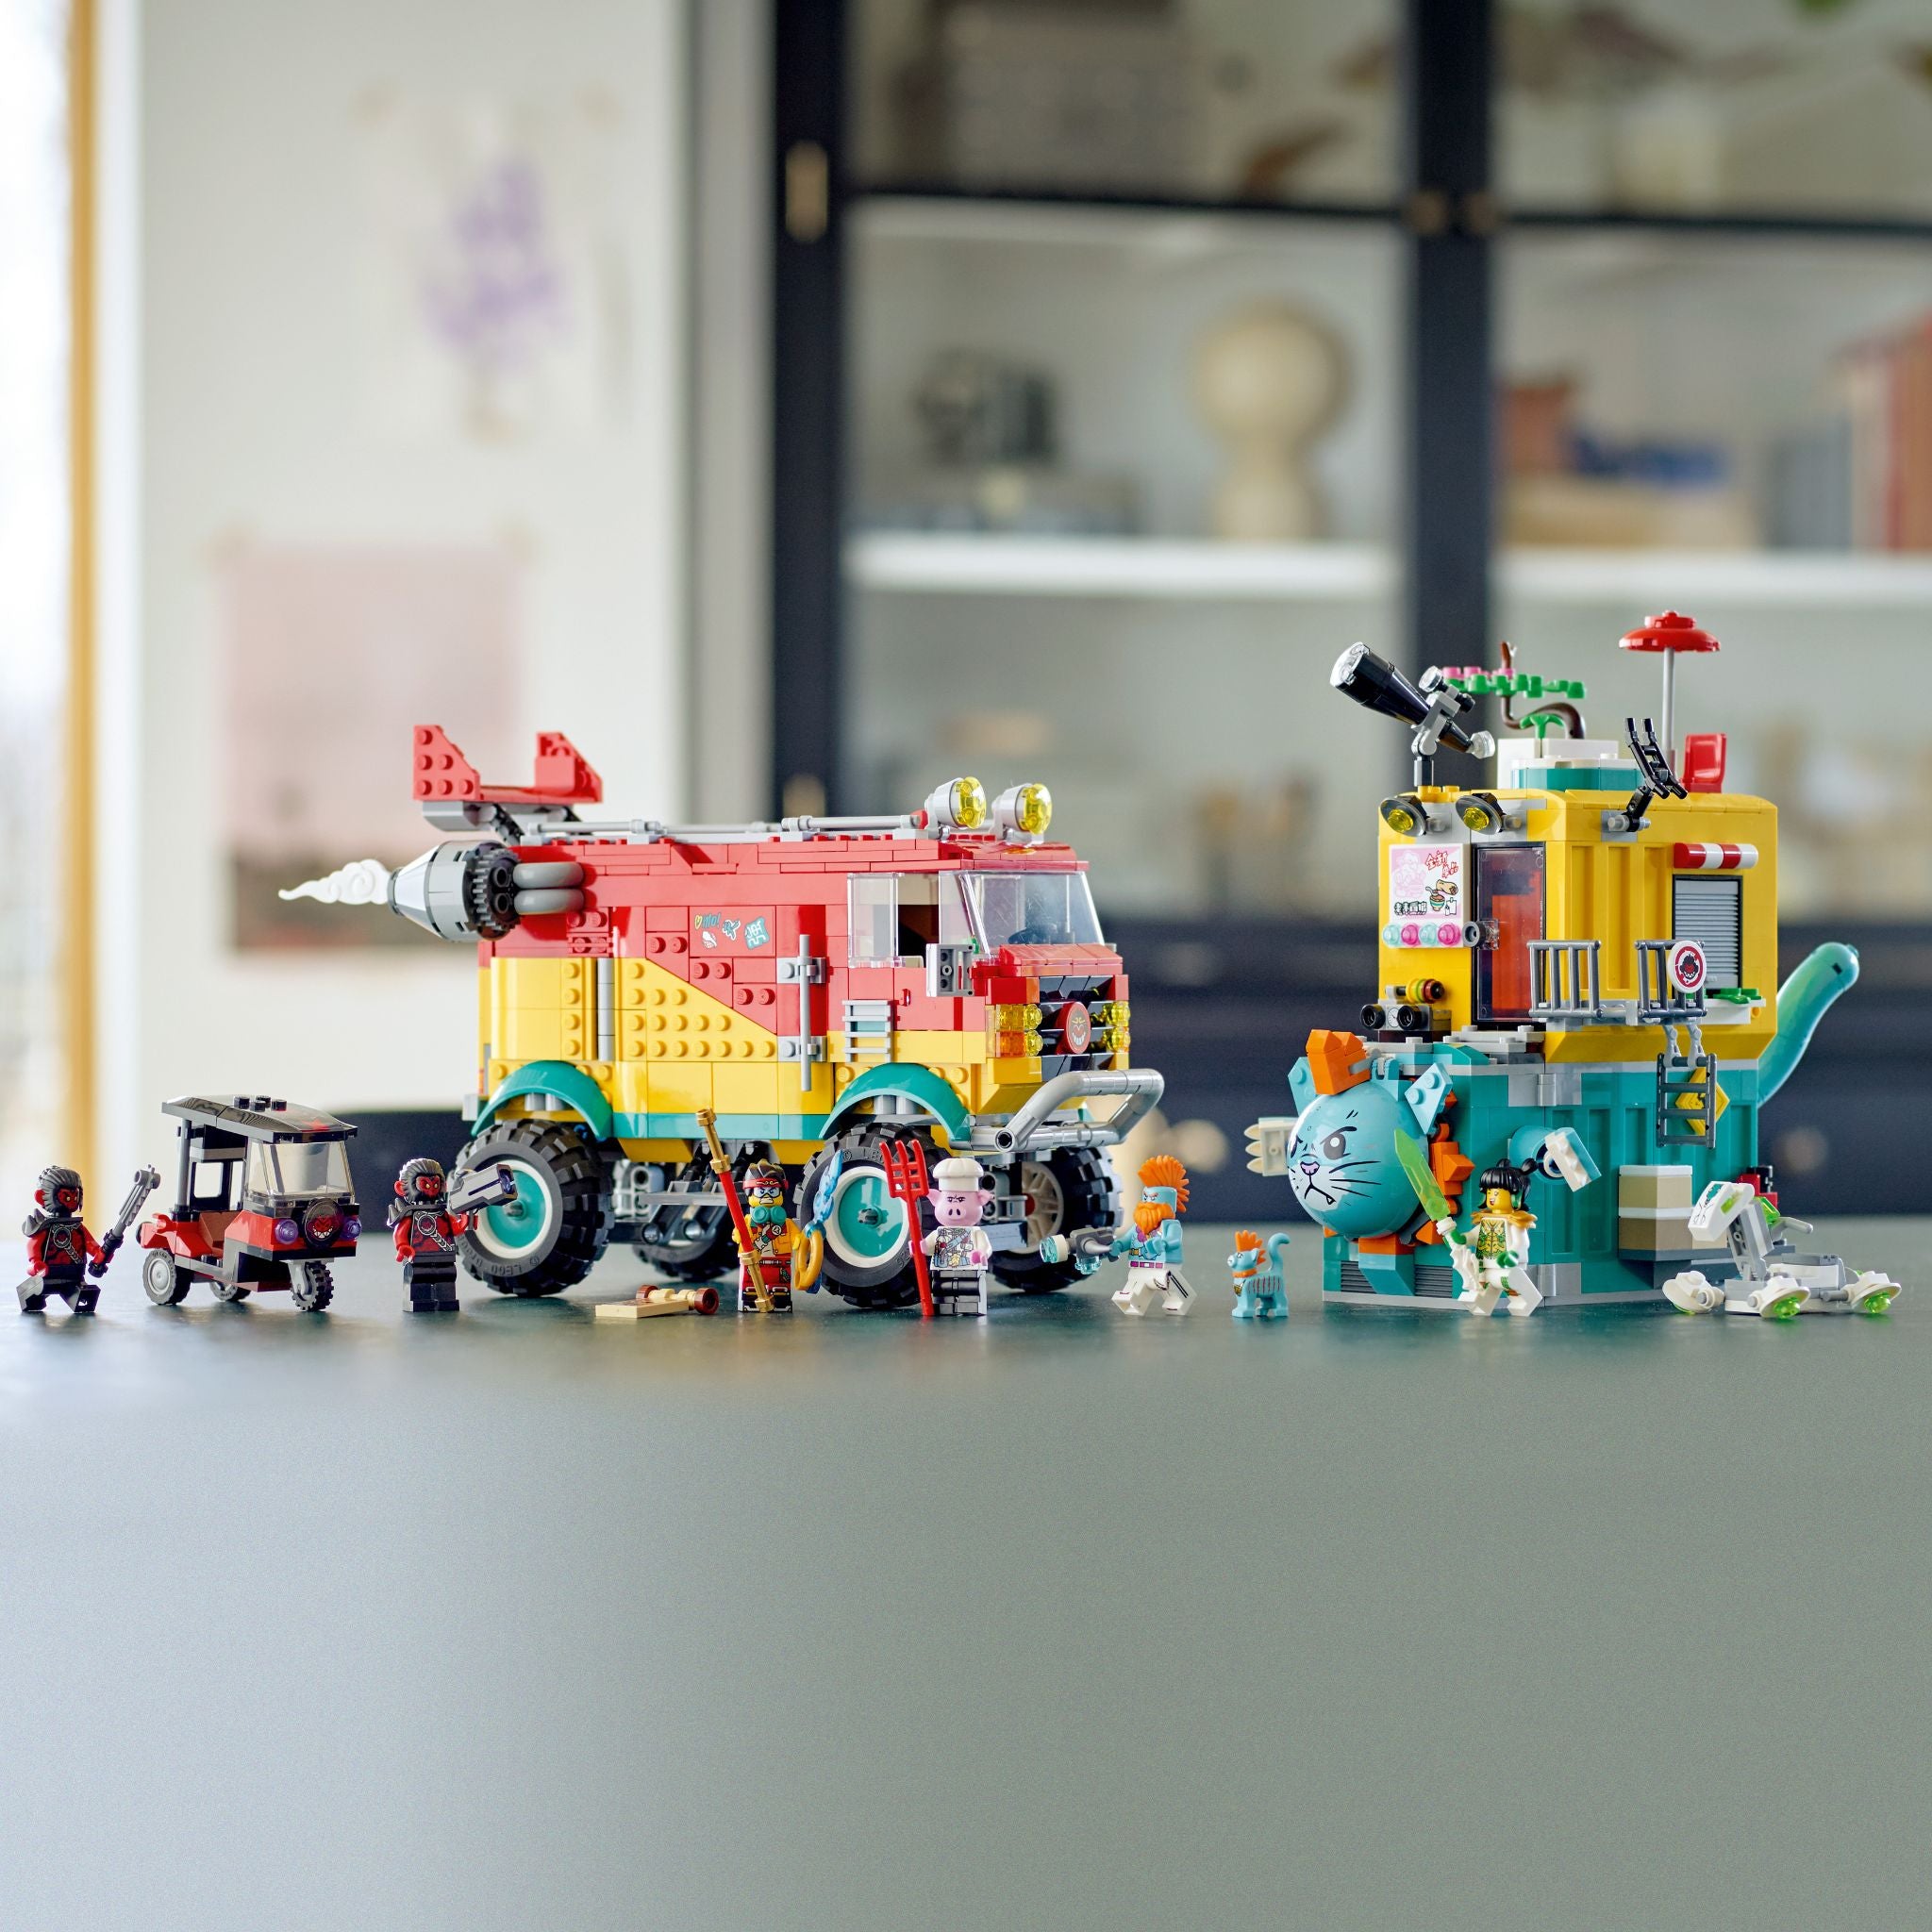 LEGO® Monkie Kid™: Monkie Kid’s Team Van (80038)